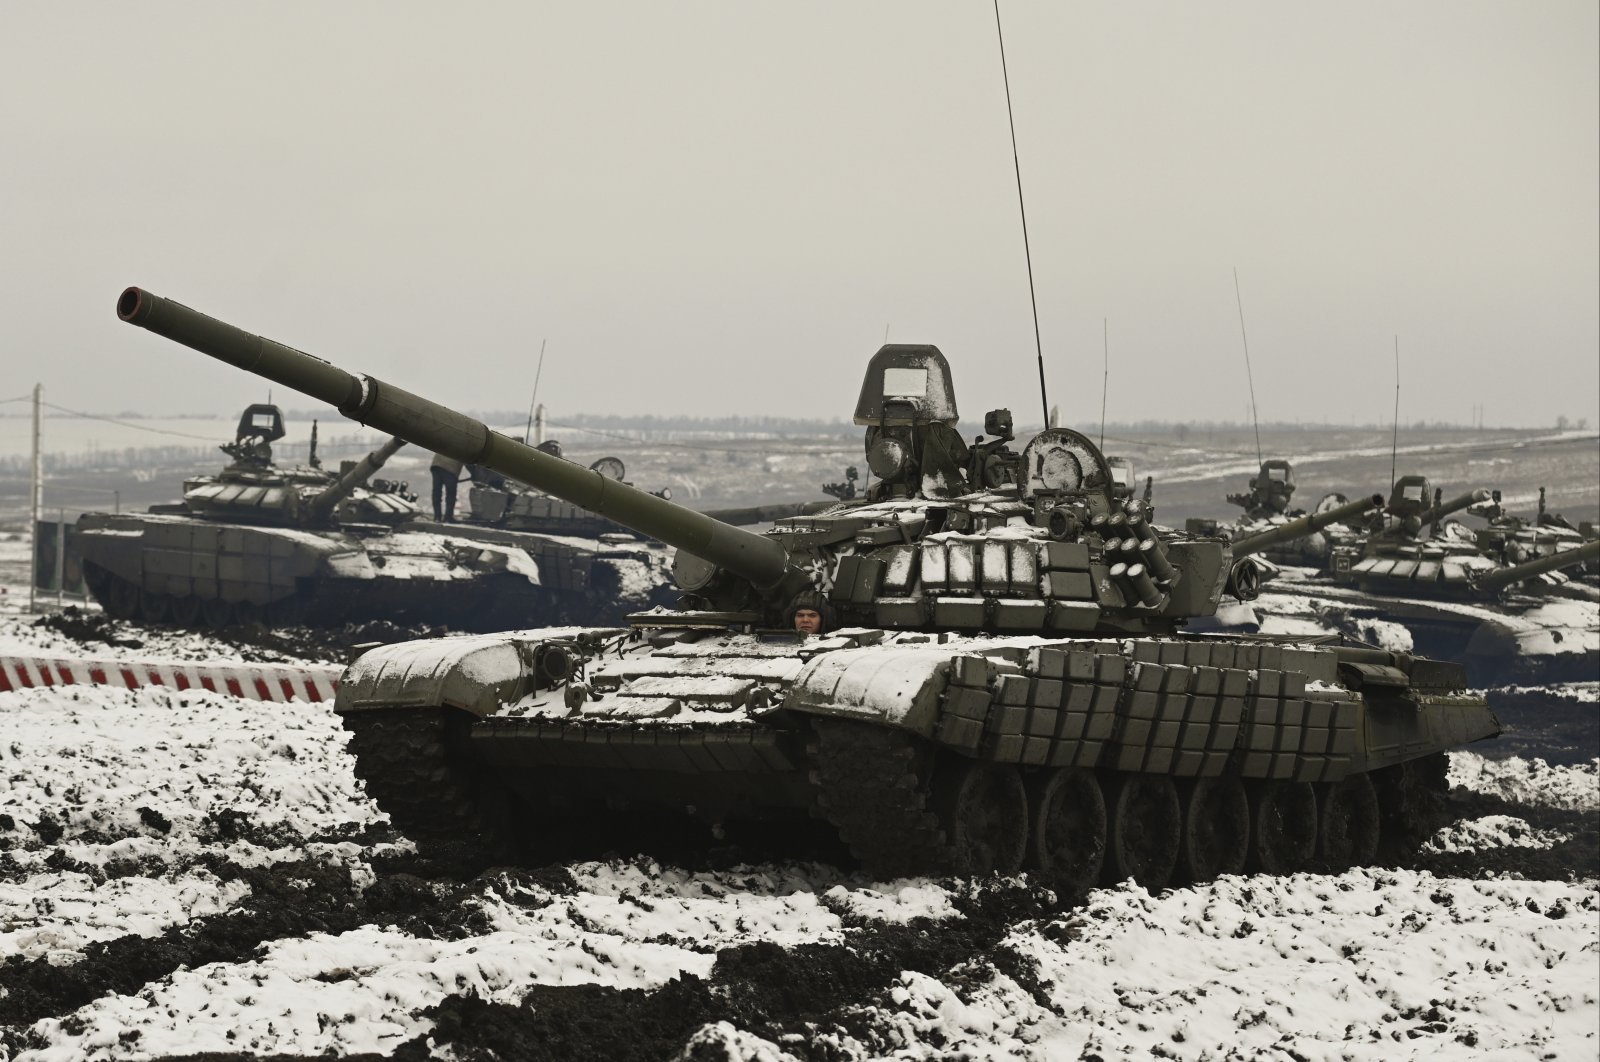 Russian T-72B3 tanks take part in drills at the Kadamovskiy firing range in the Rostov region in southern Russia, Jan. 12, 2022. (AP Photo)